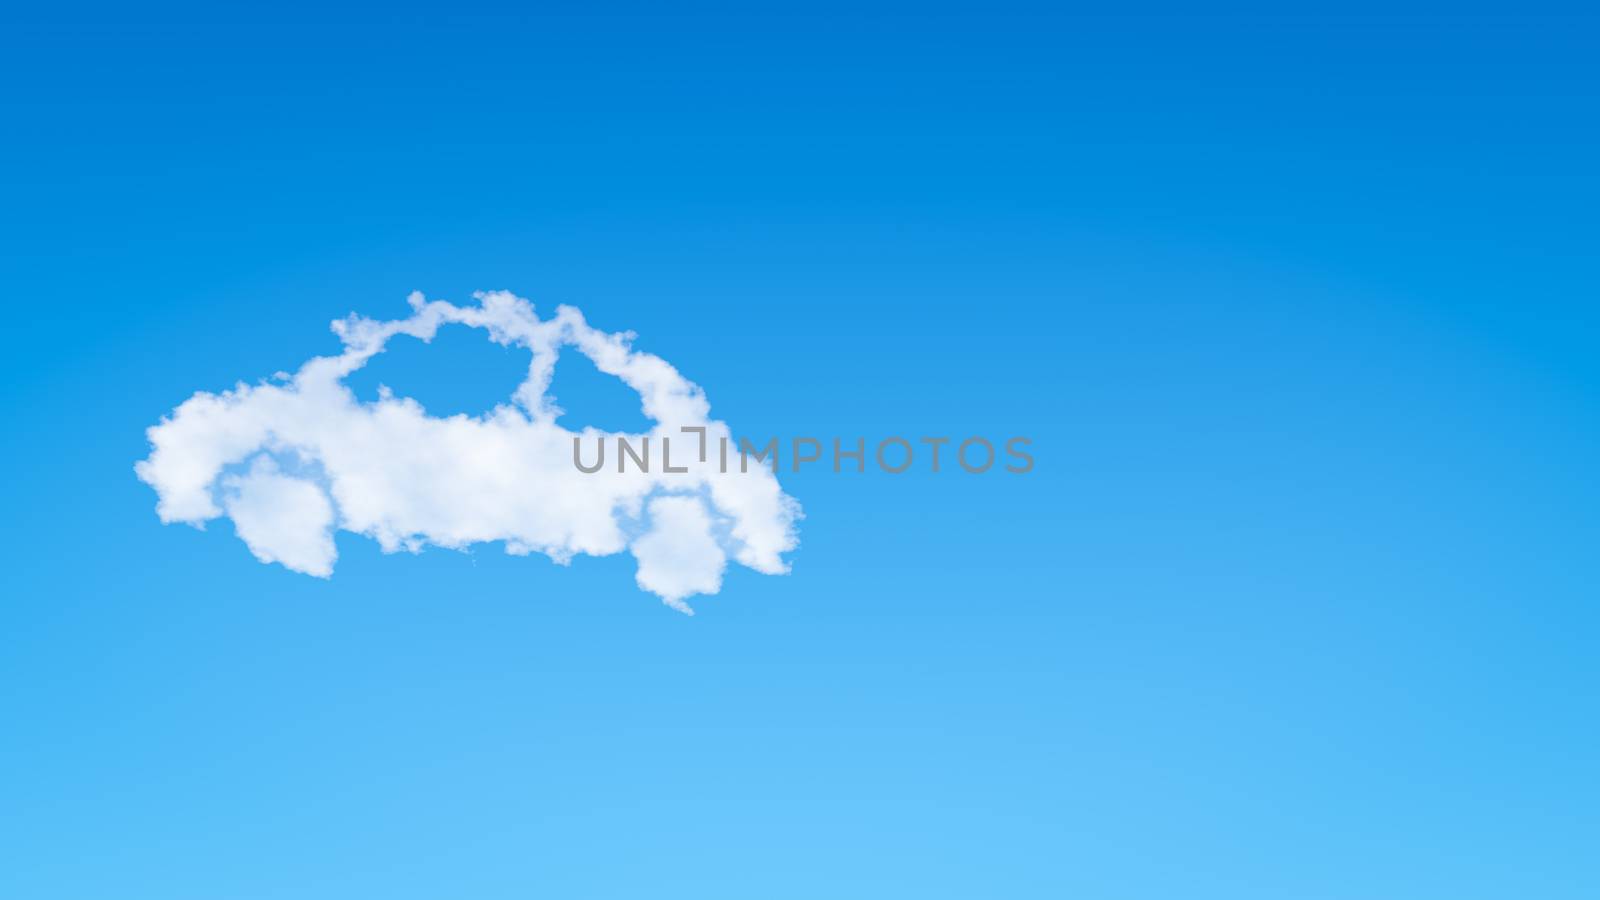 Car Shaped Cloud by make